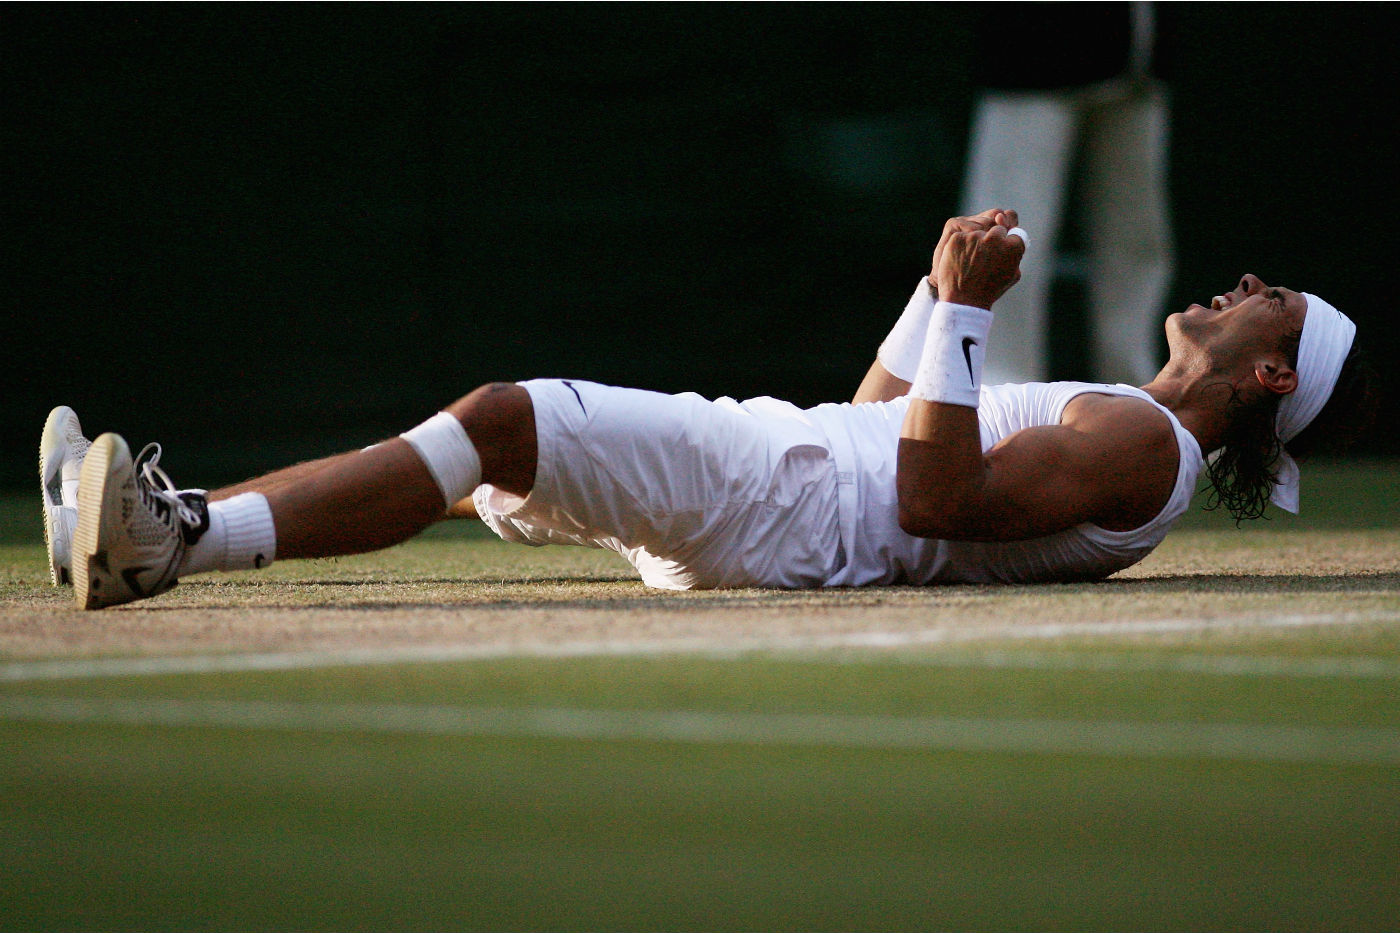 Grand Slam Champion Rafael Nadal in the 2008 Wimbledon Finals